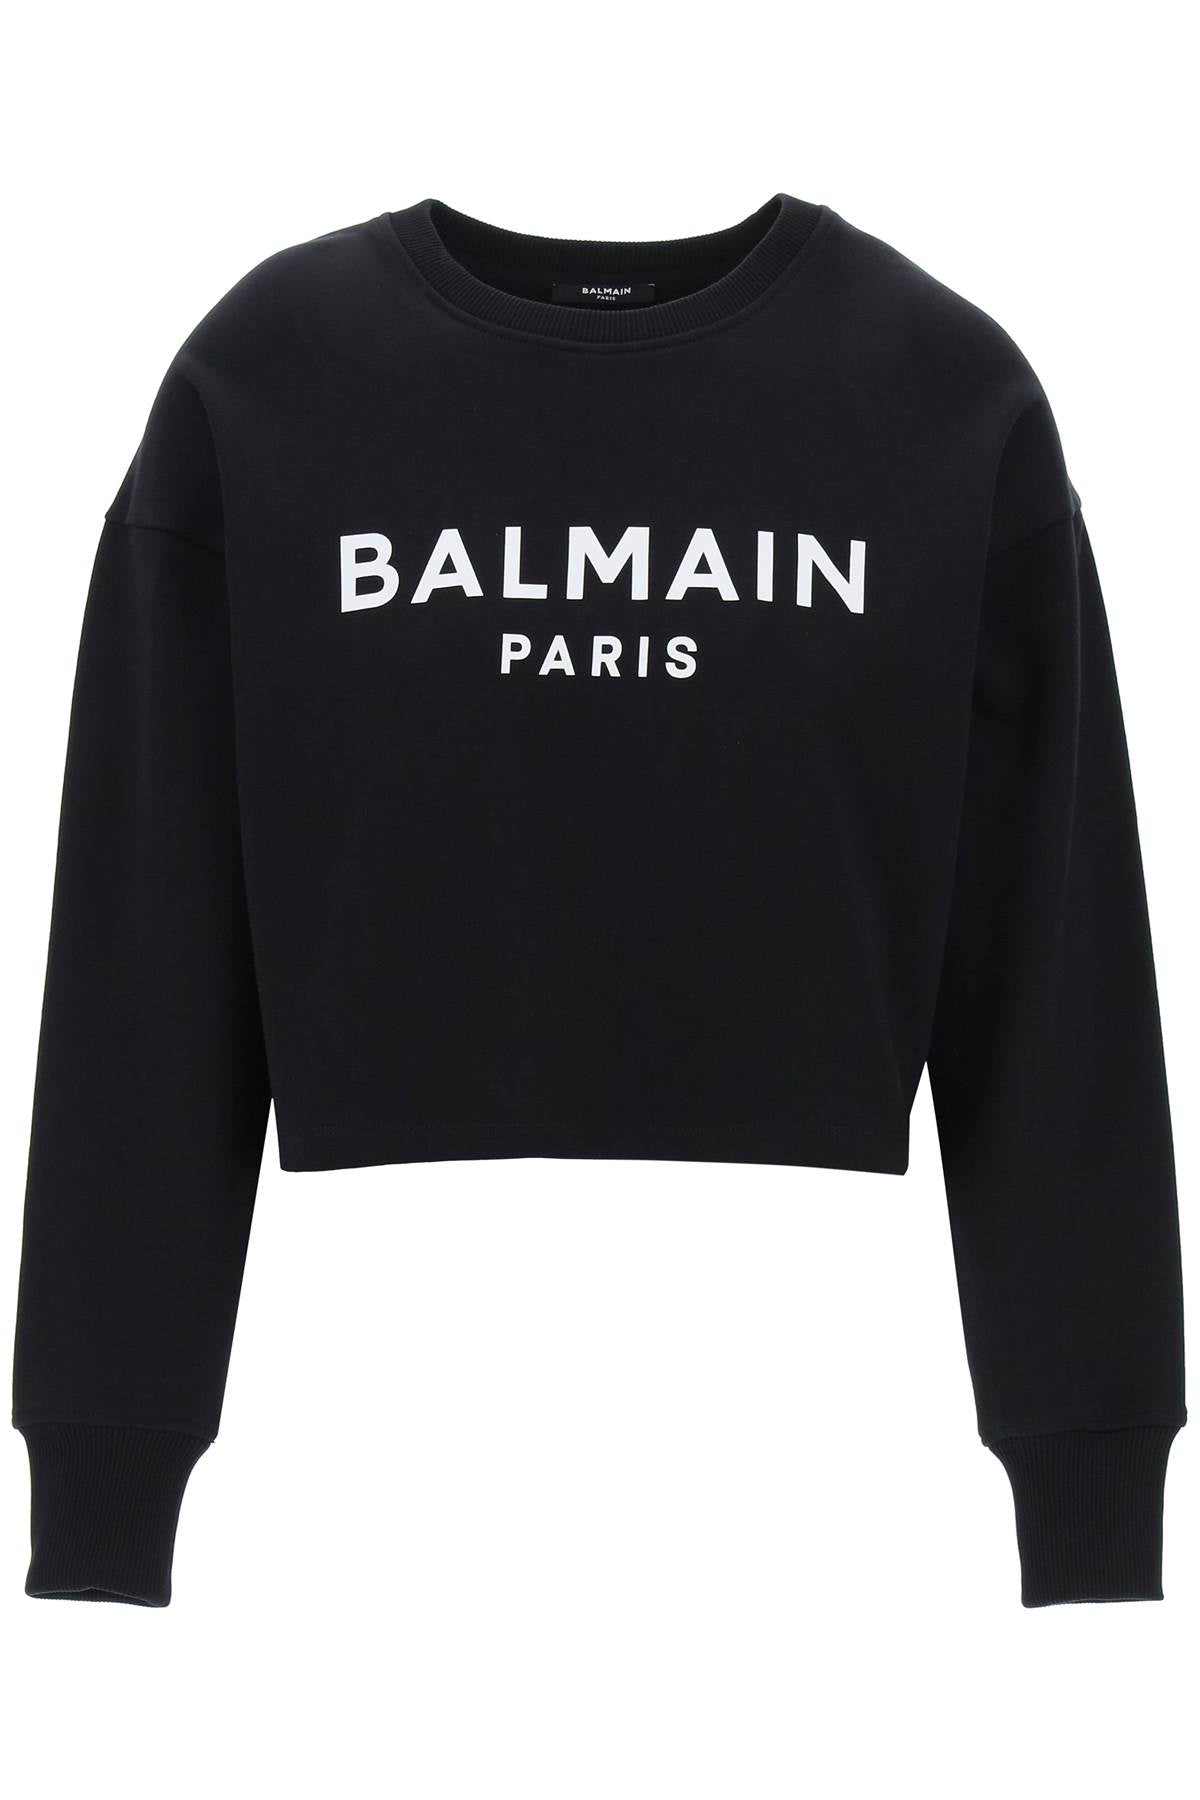 Balmain Cropped Sweatshirt With Flocked Logo For Women In Black